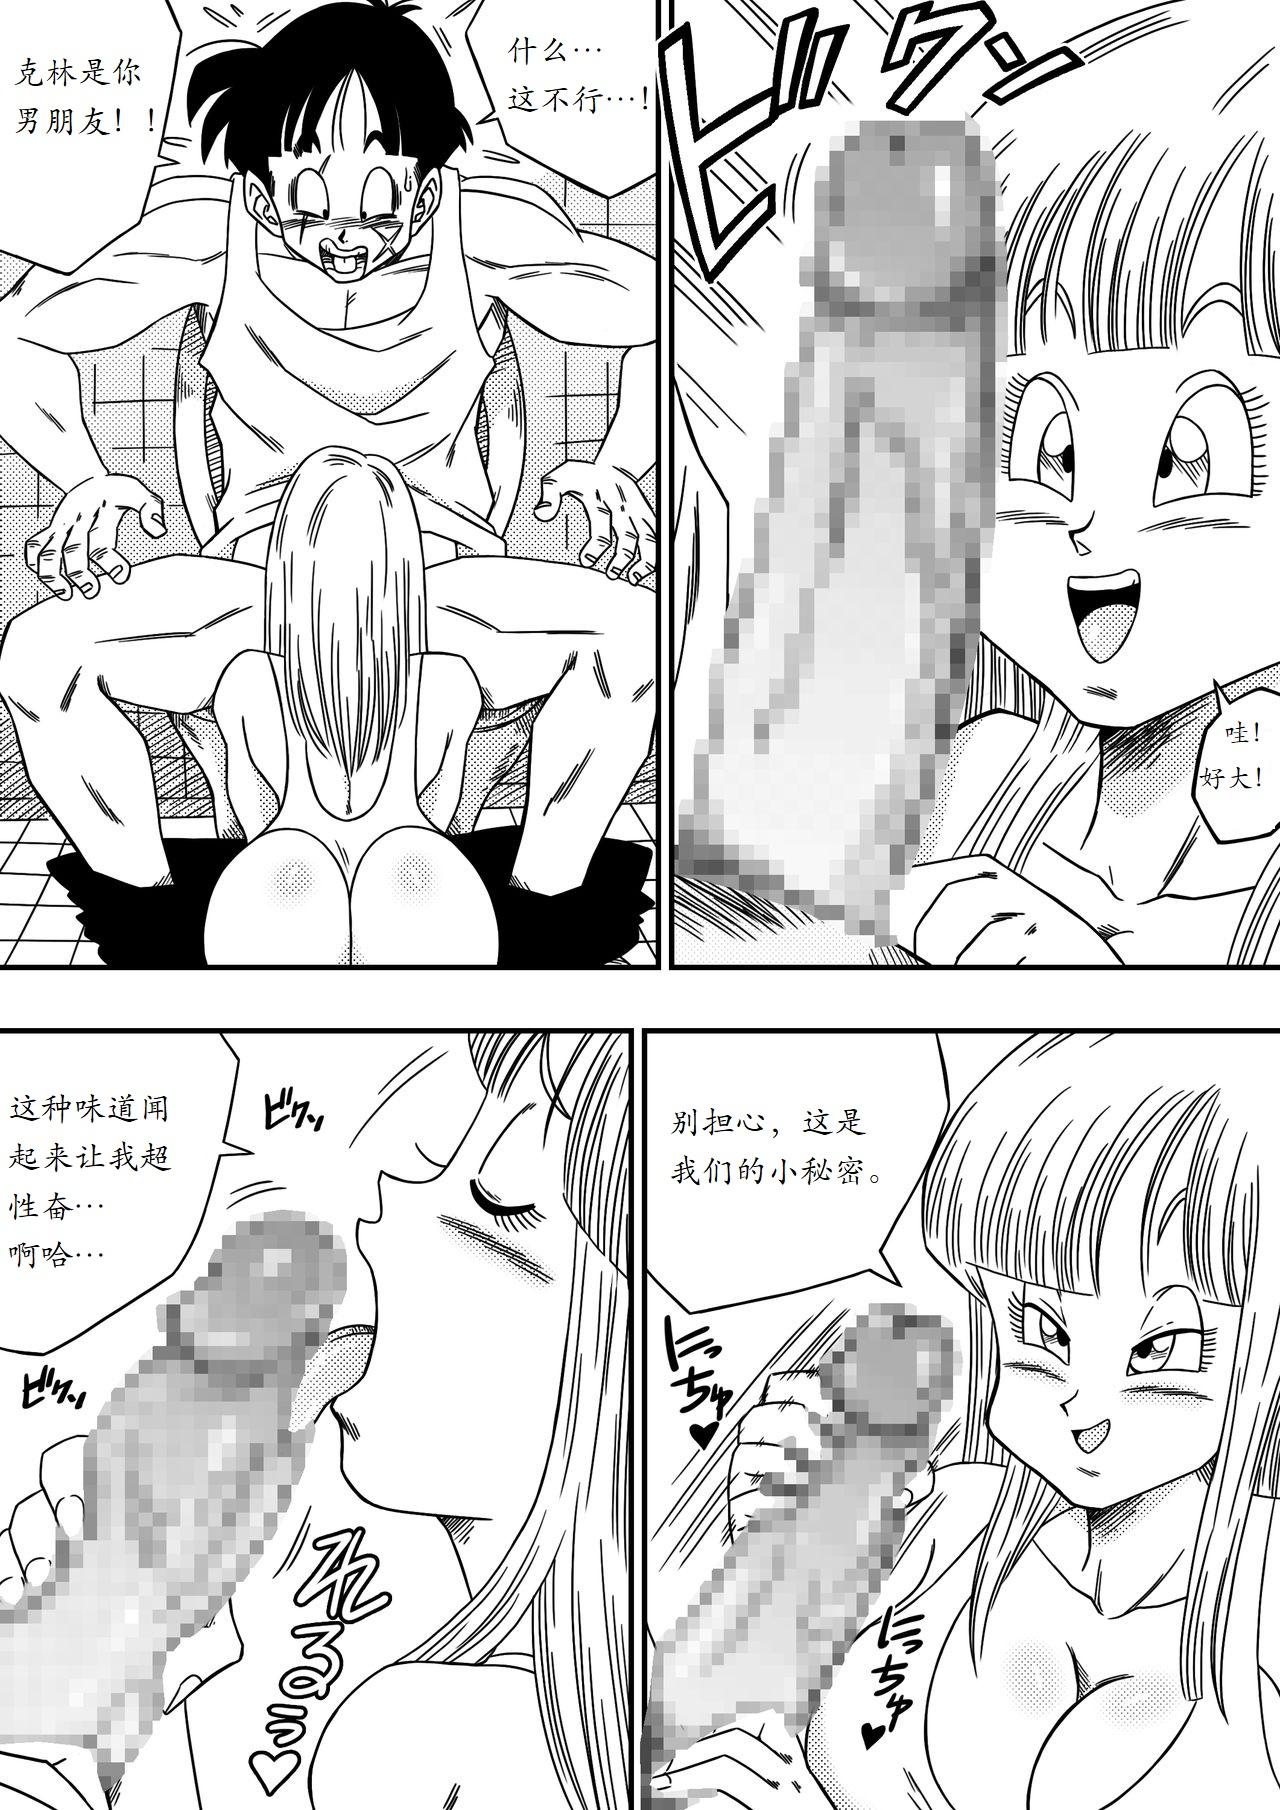 Foreplay BITCH GIRLFRIEND - Dragon ball z Bj - Page 7